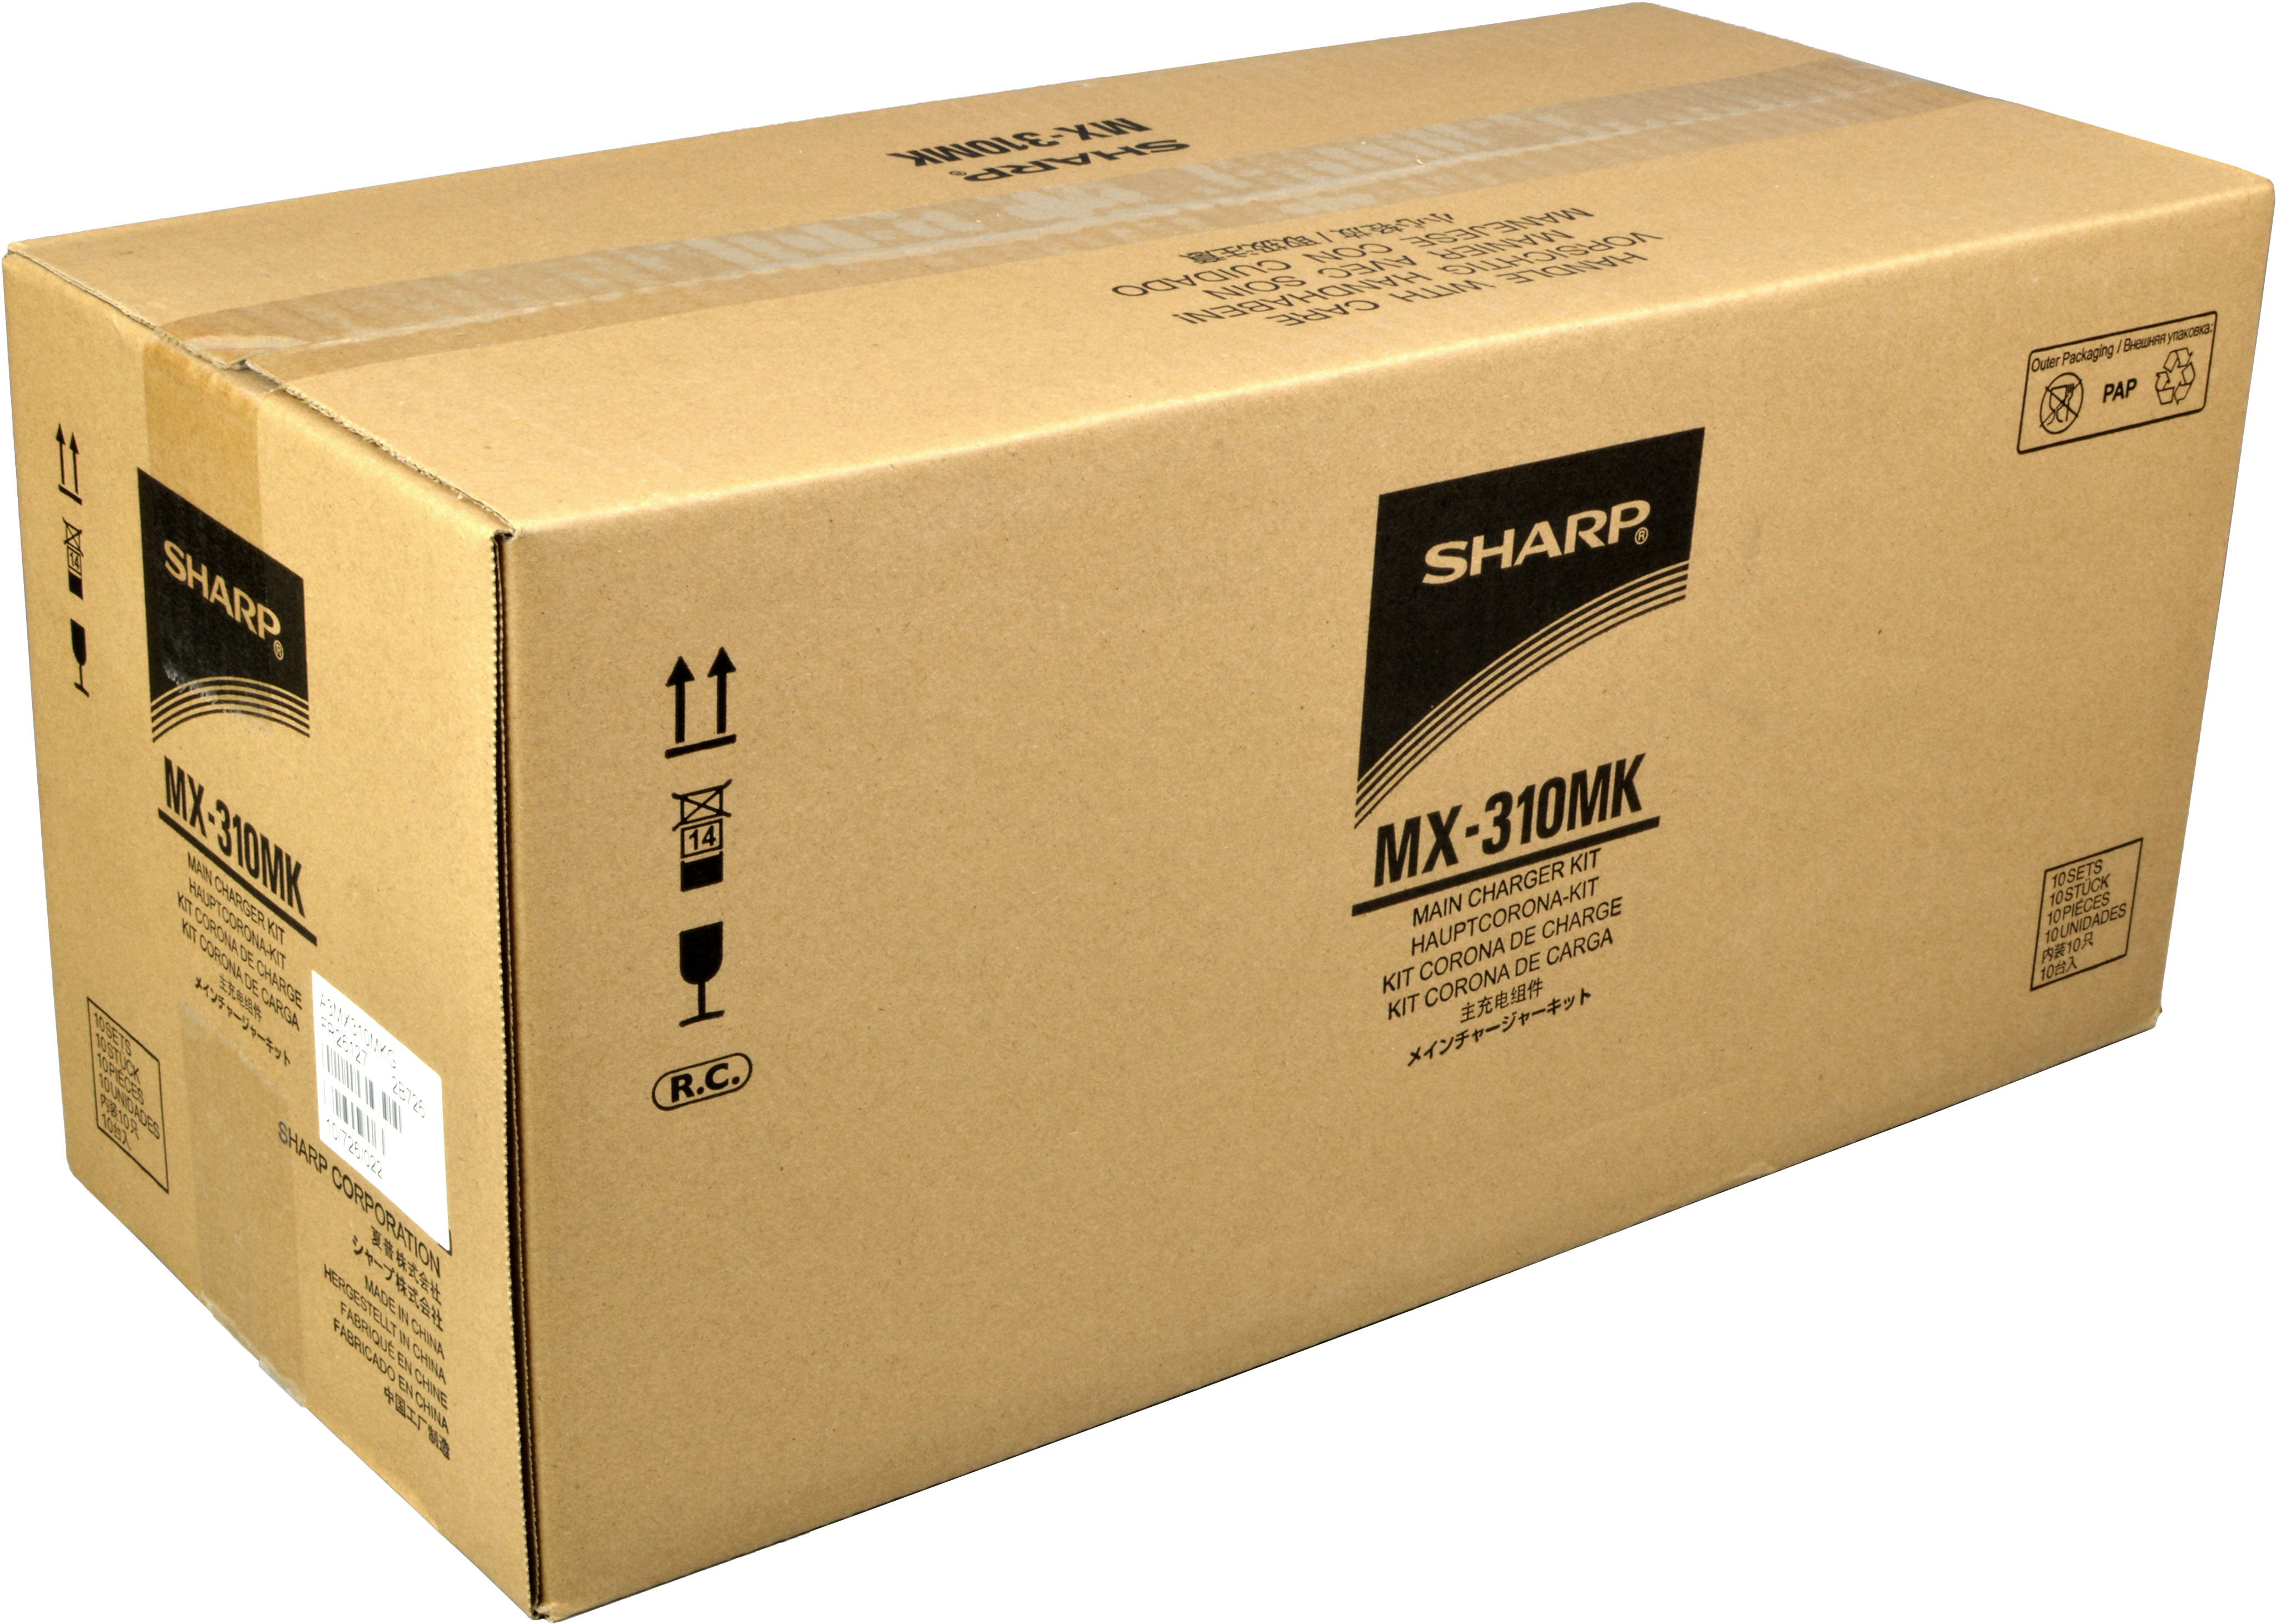 Sharp Main Charger Kit MX-310MK